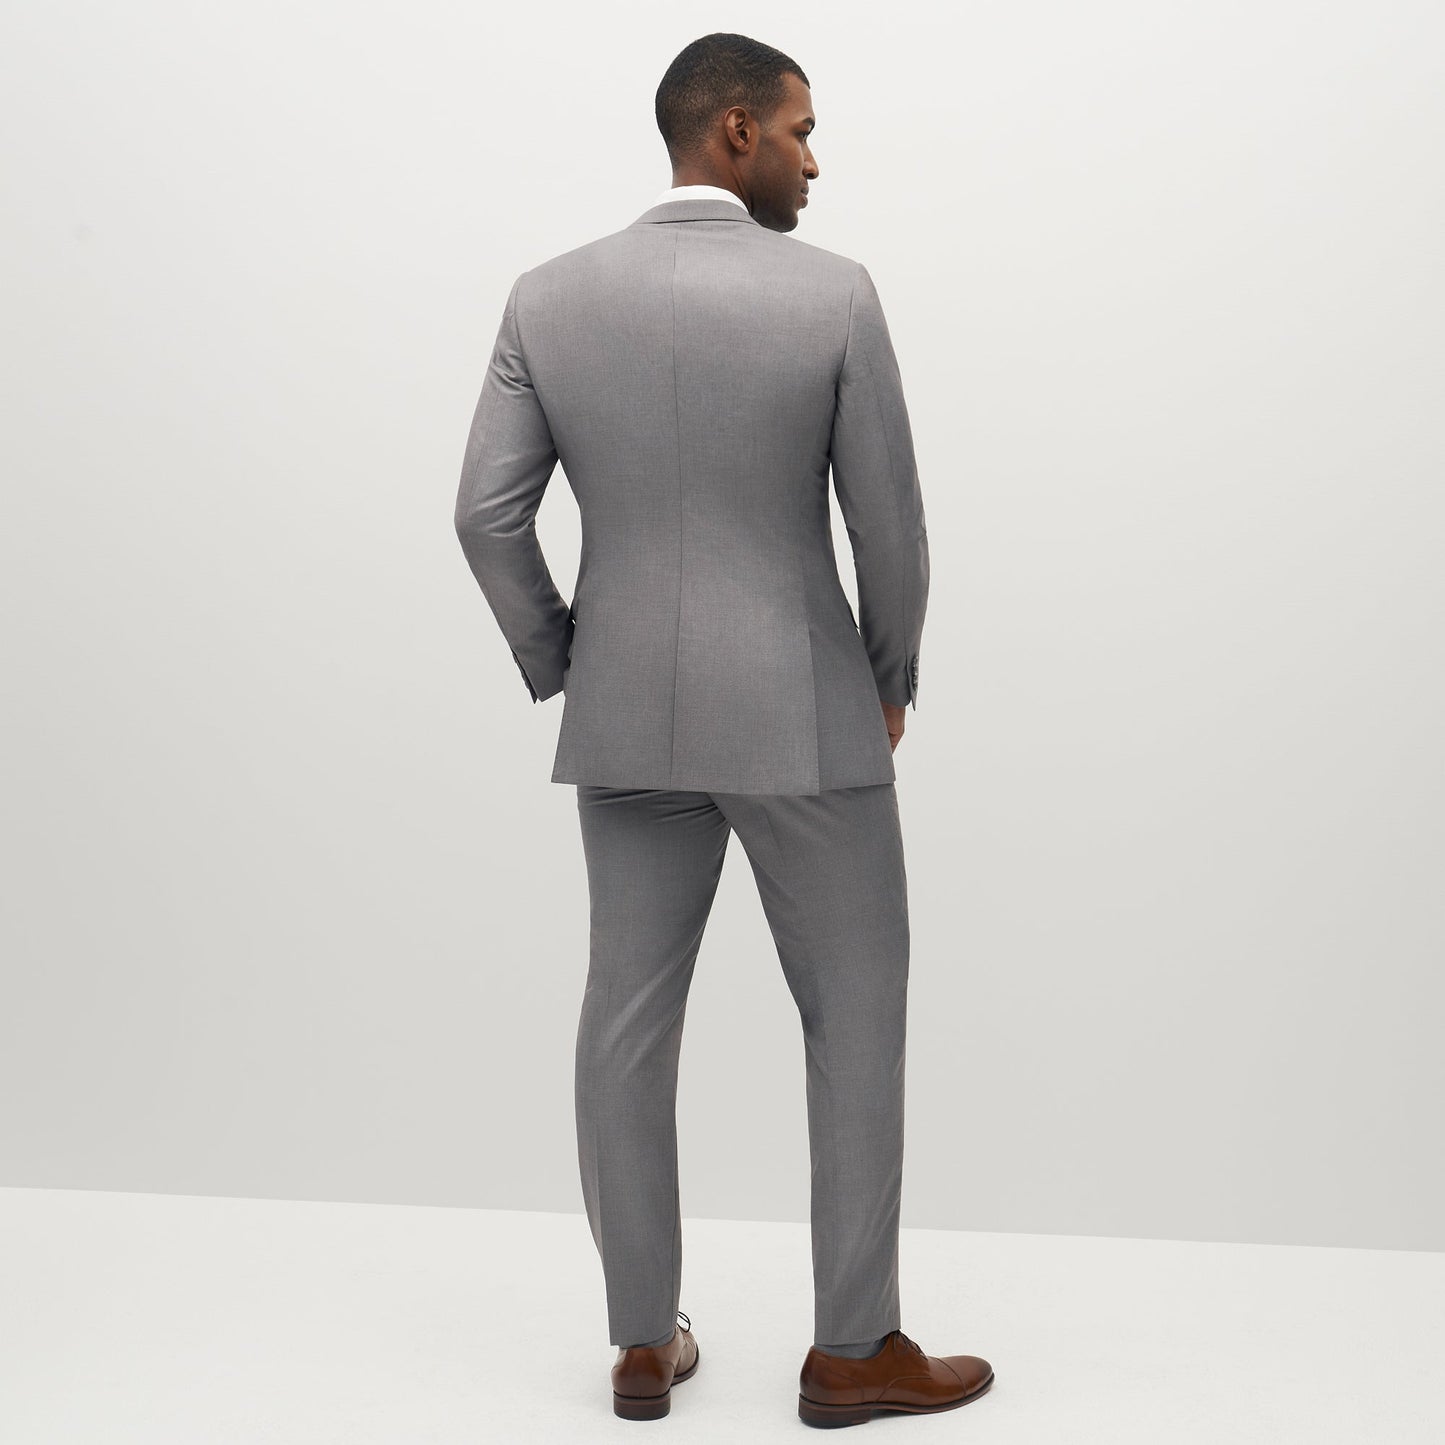 Textured Gray Suit Pants by SuitShop